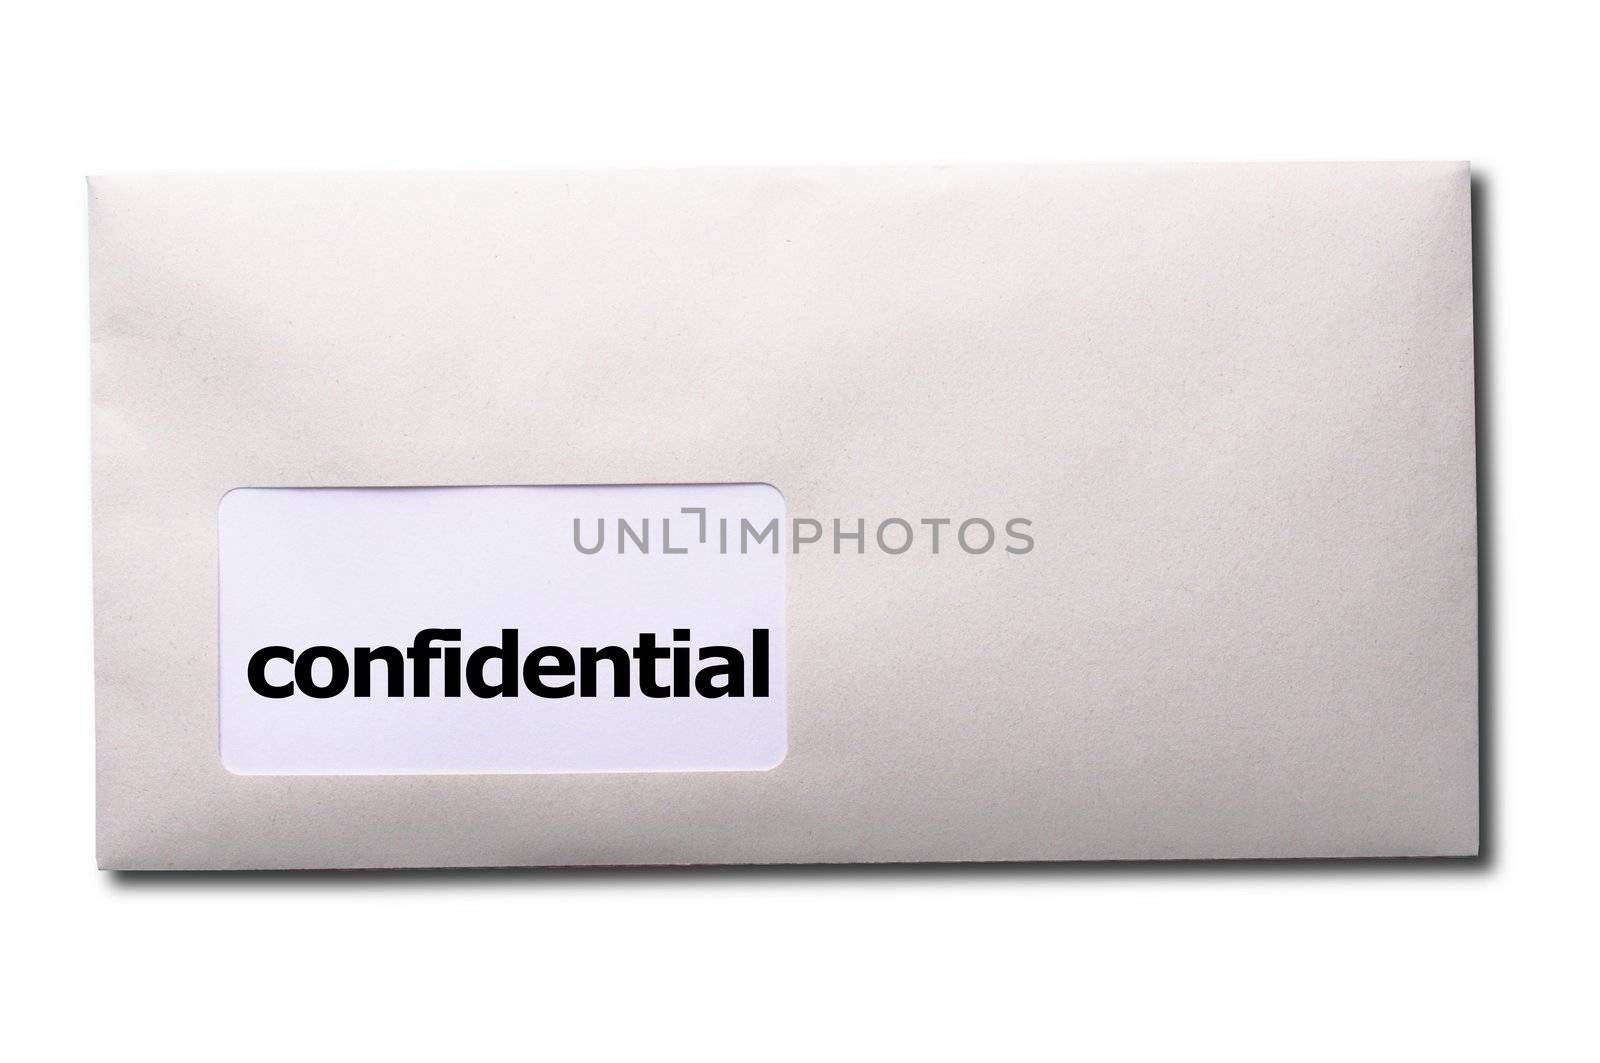 confidential or top secret letter showing business post concept